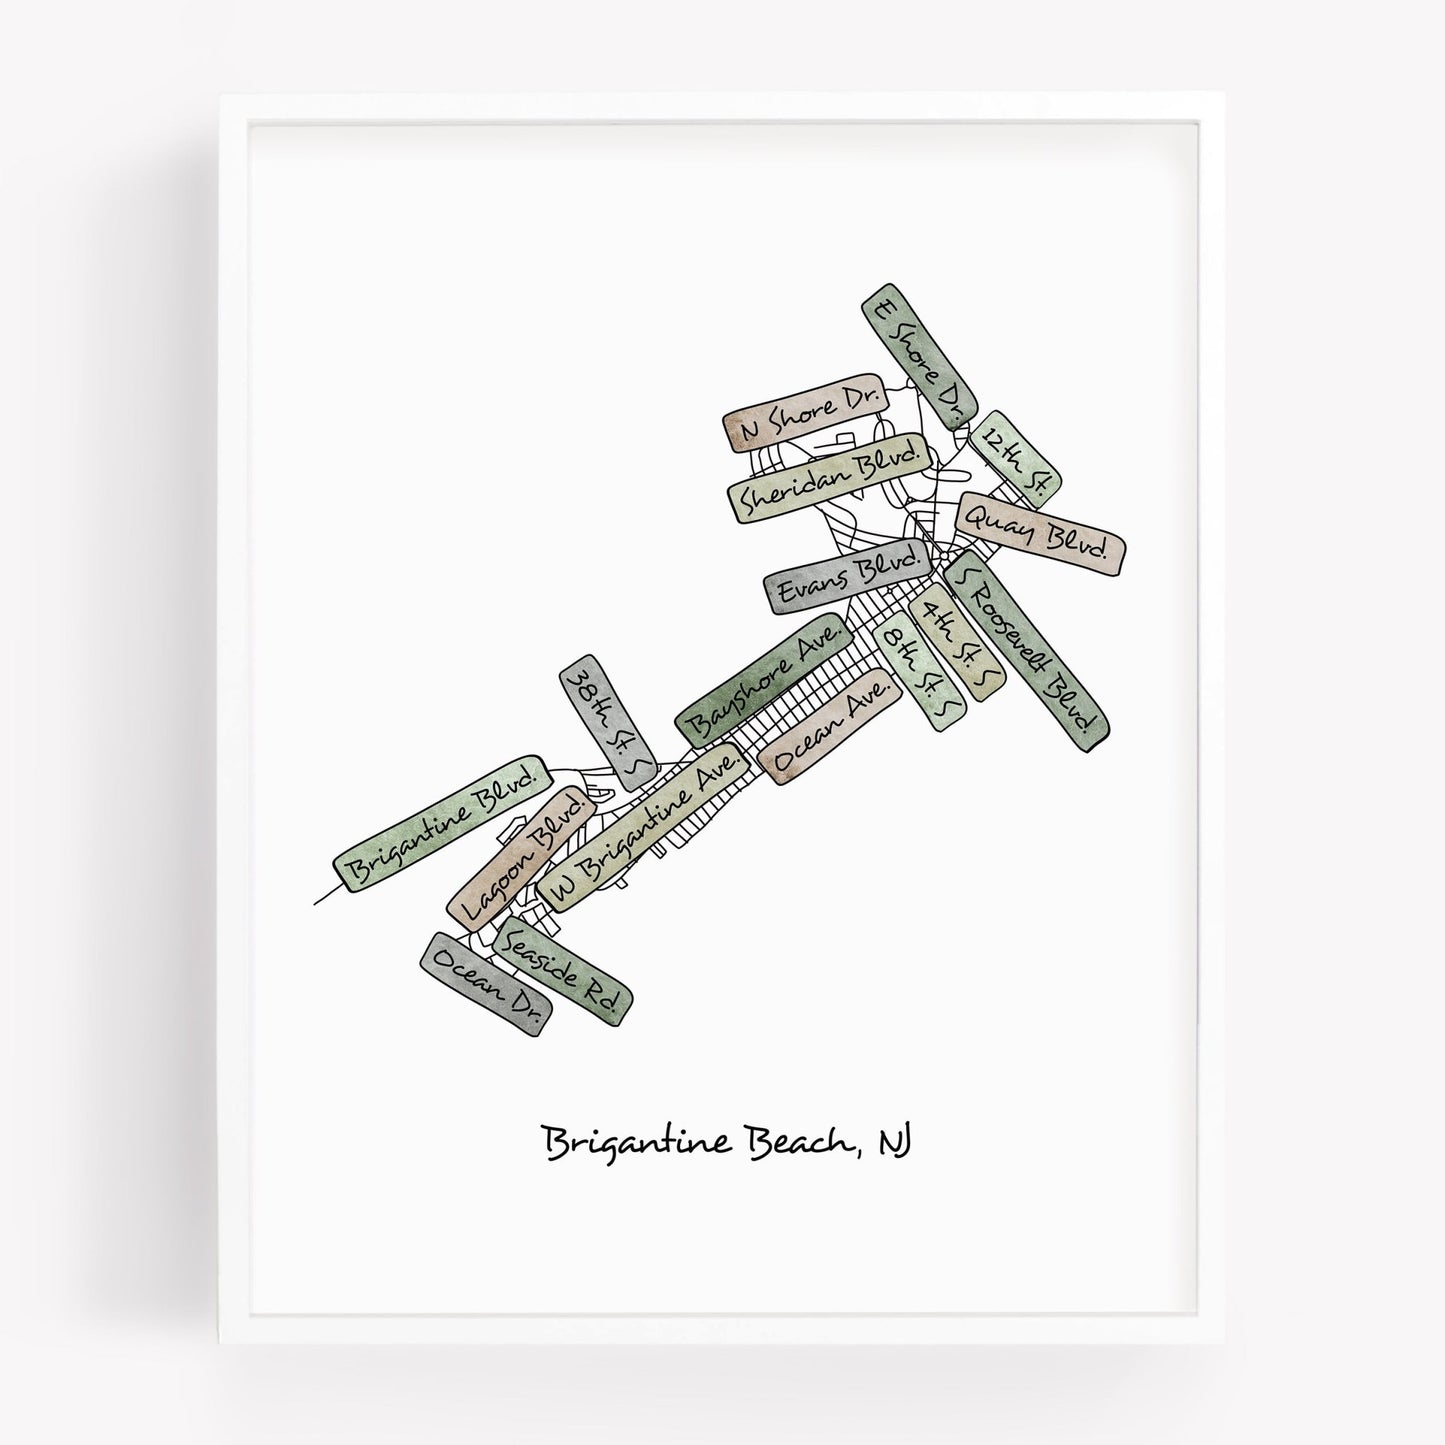 A hand-drawn street map art print of Brigantine Beach New Jersey - Sparks House Co